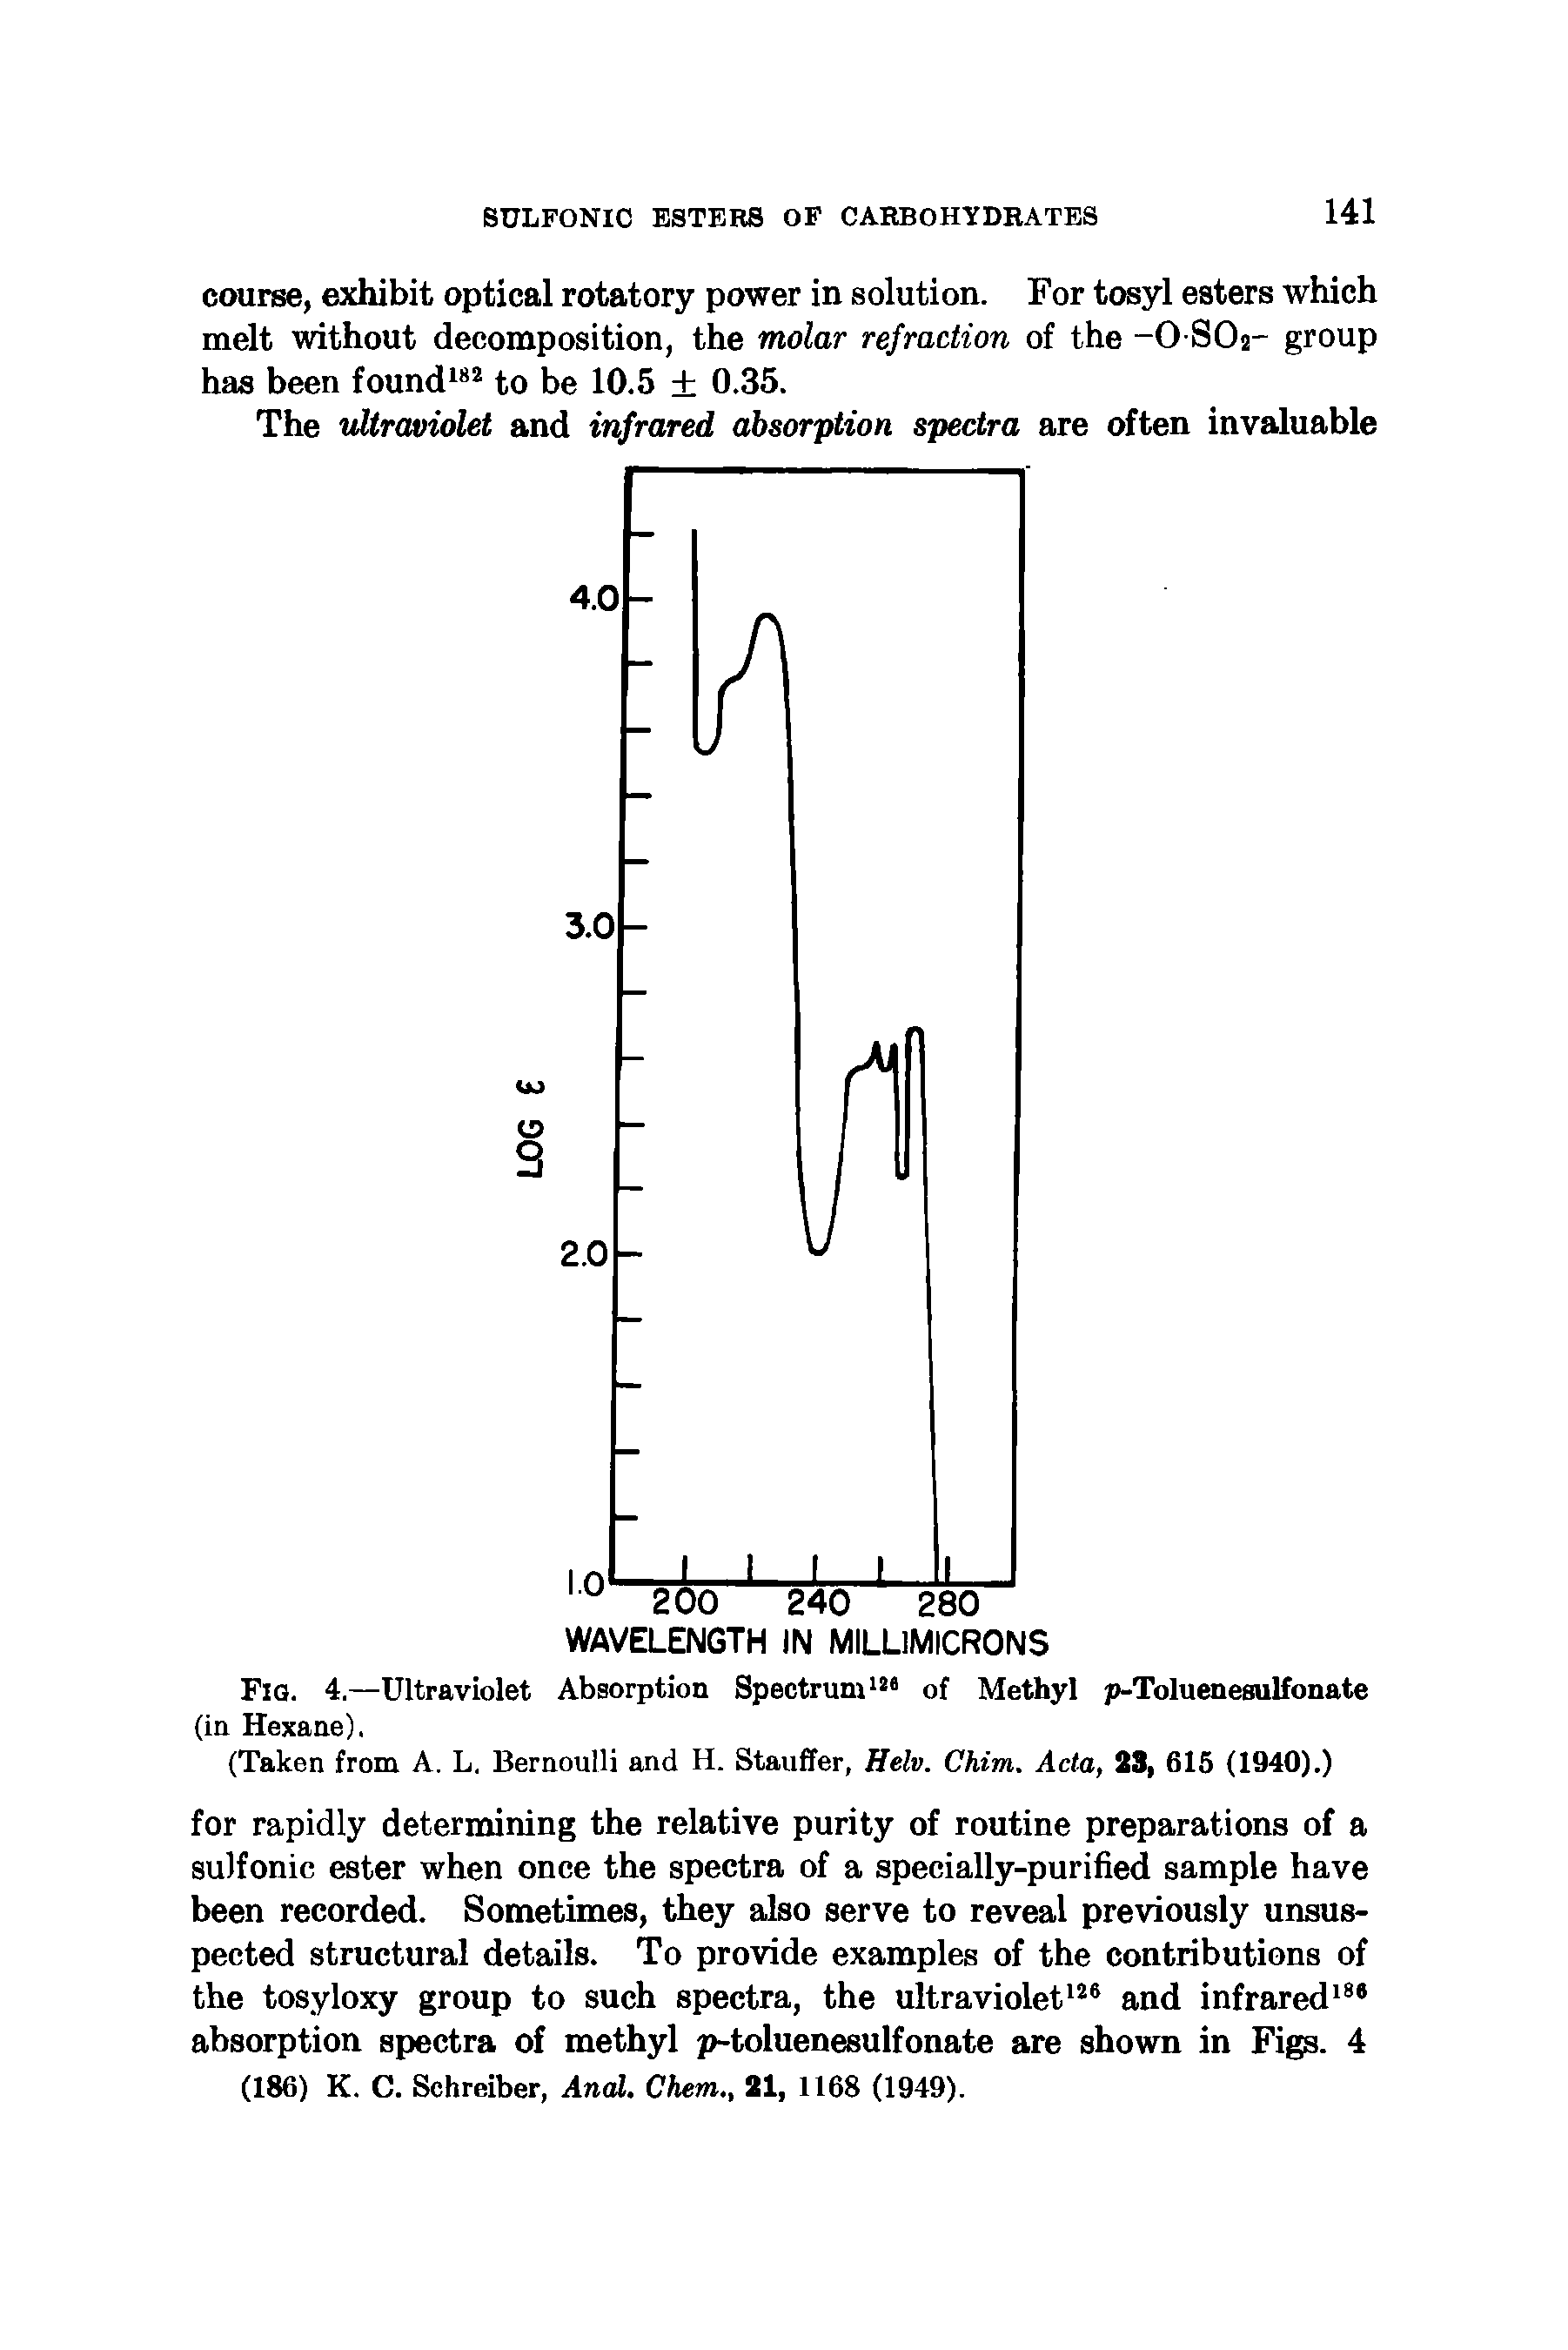 Fig. 4.—Ultraviolet Absorption Spectrum1 t of Methyl p-Toluenesulfonate (in Hexane).